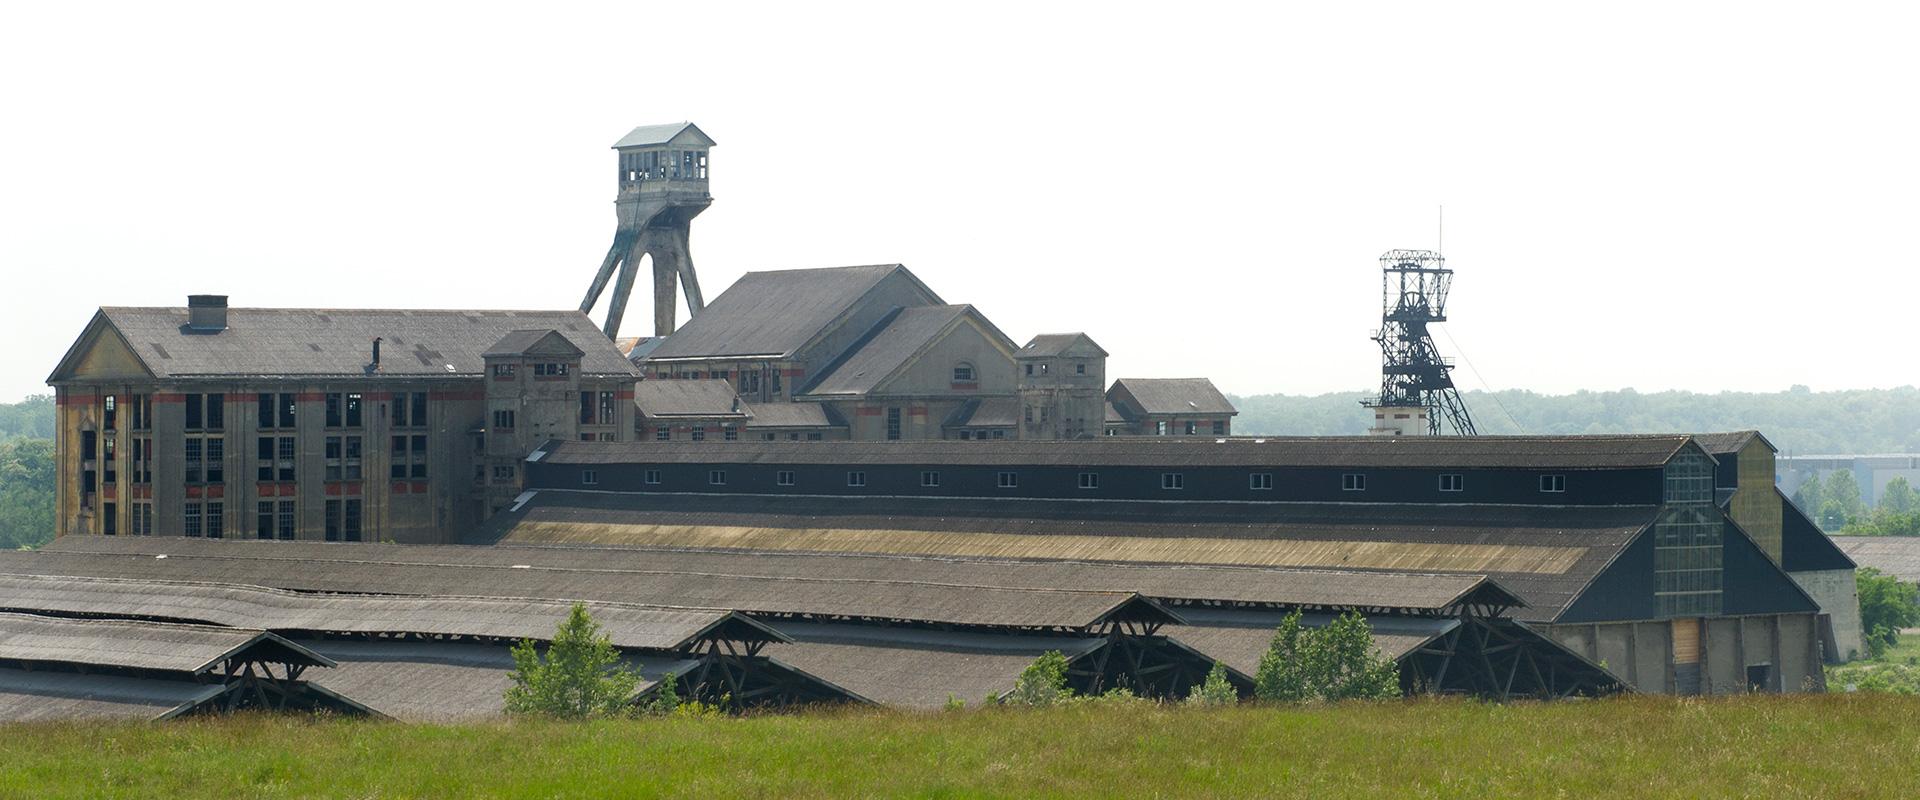 Mine facilities, Upper Rhine